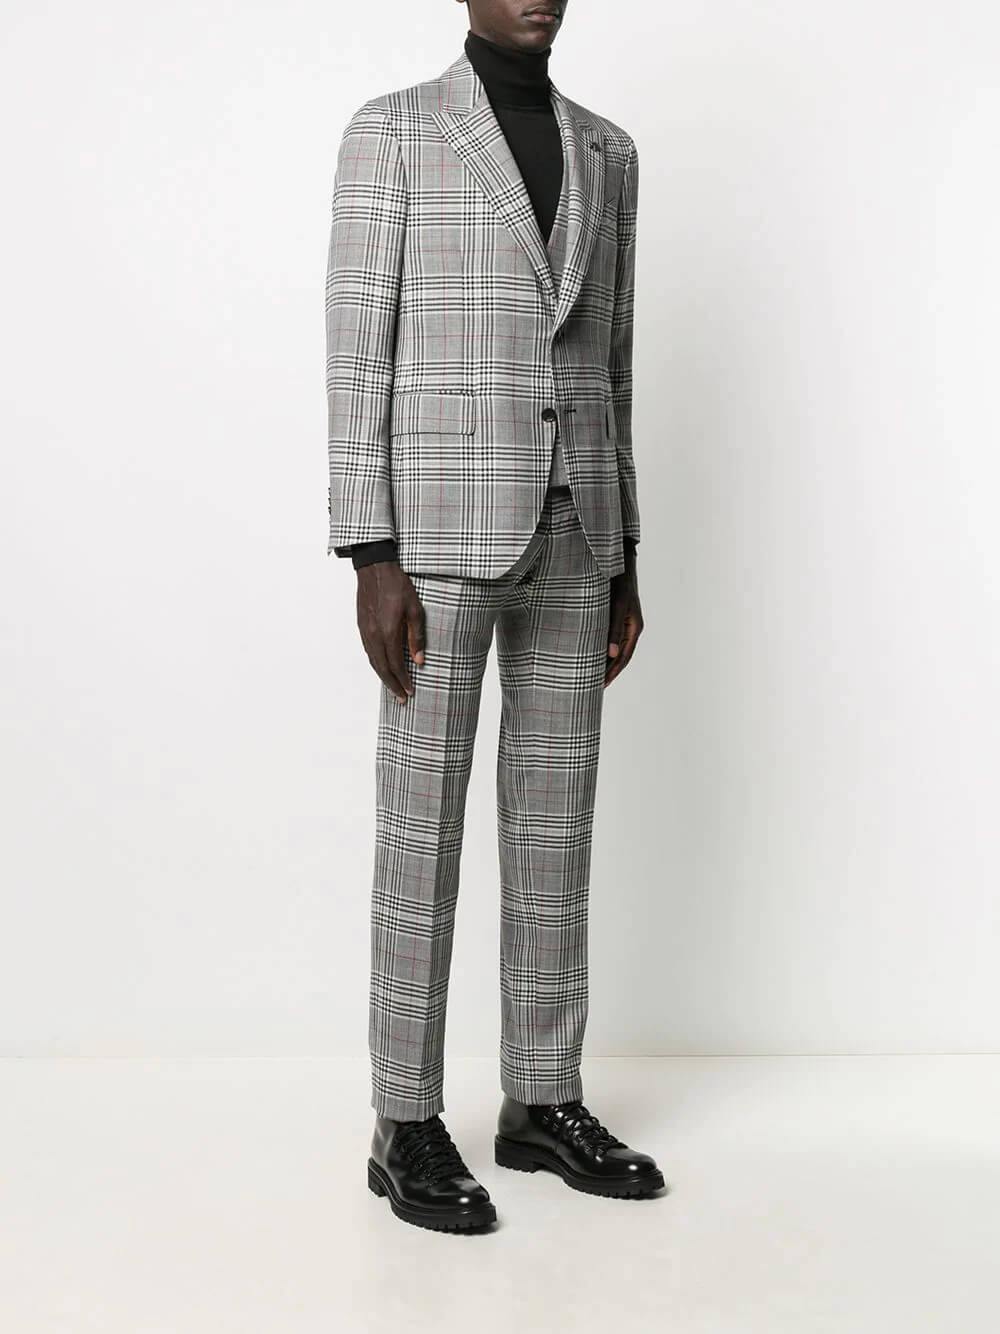 GABRIELE PASINI 2-Piece Wool-Blend Suit in Black and White Glen Checks | CLOSET Singapore